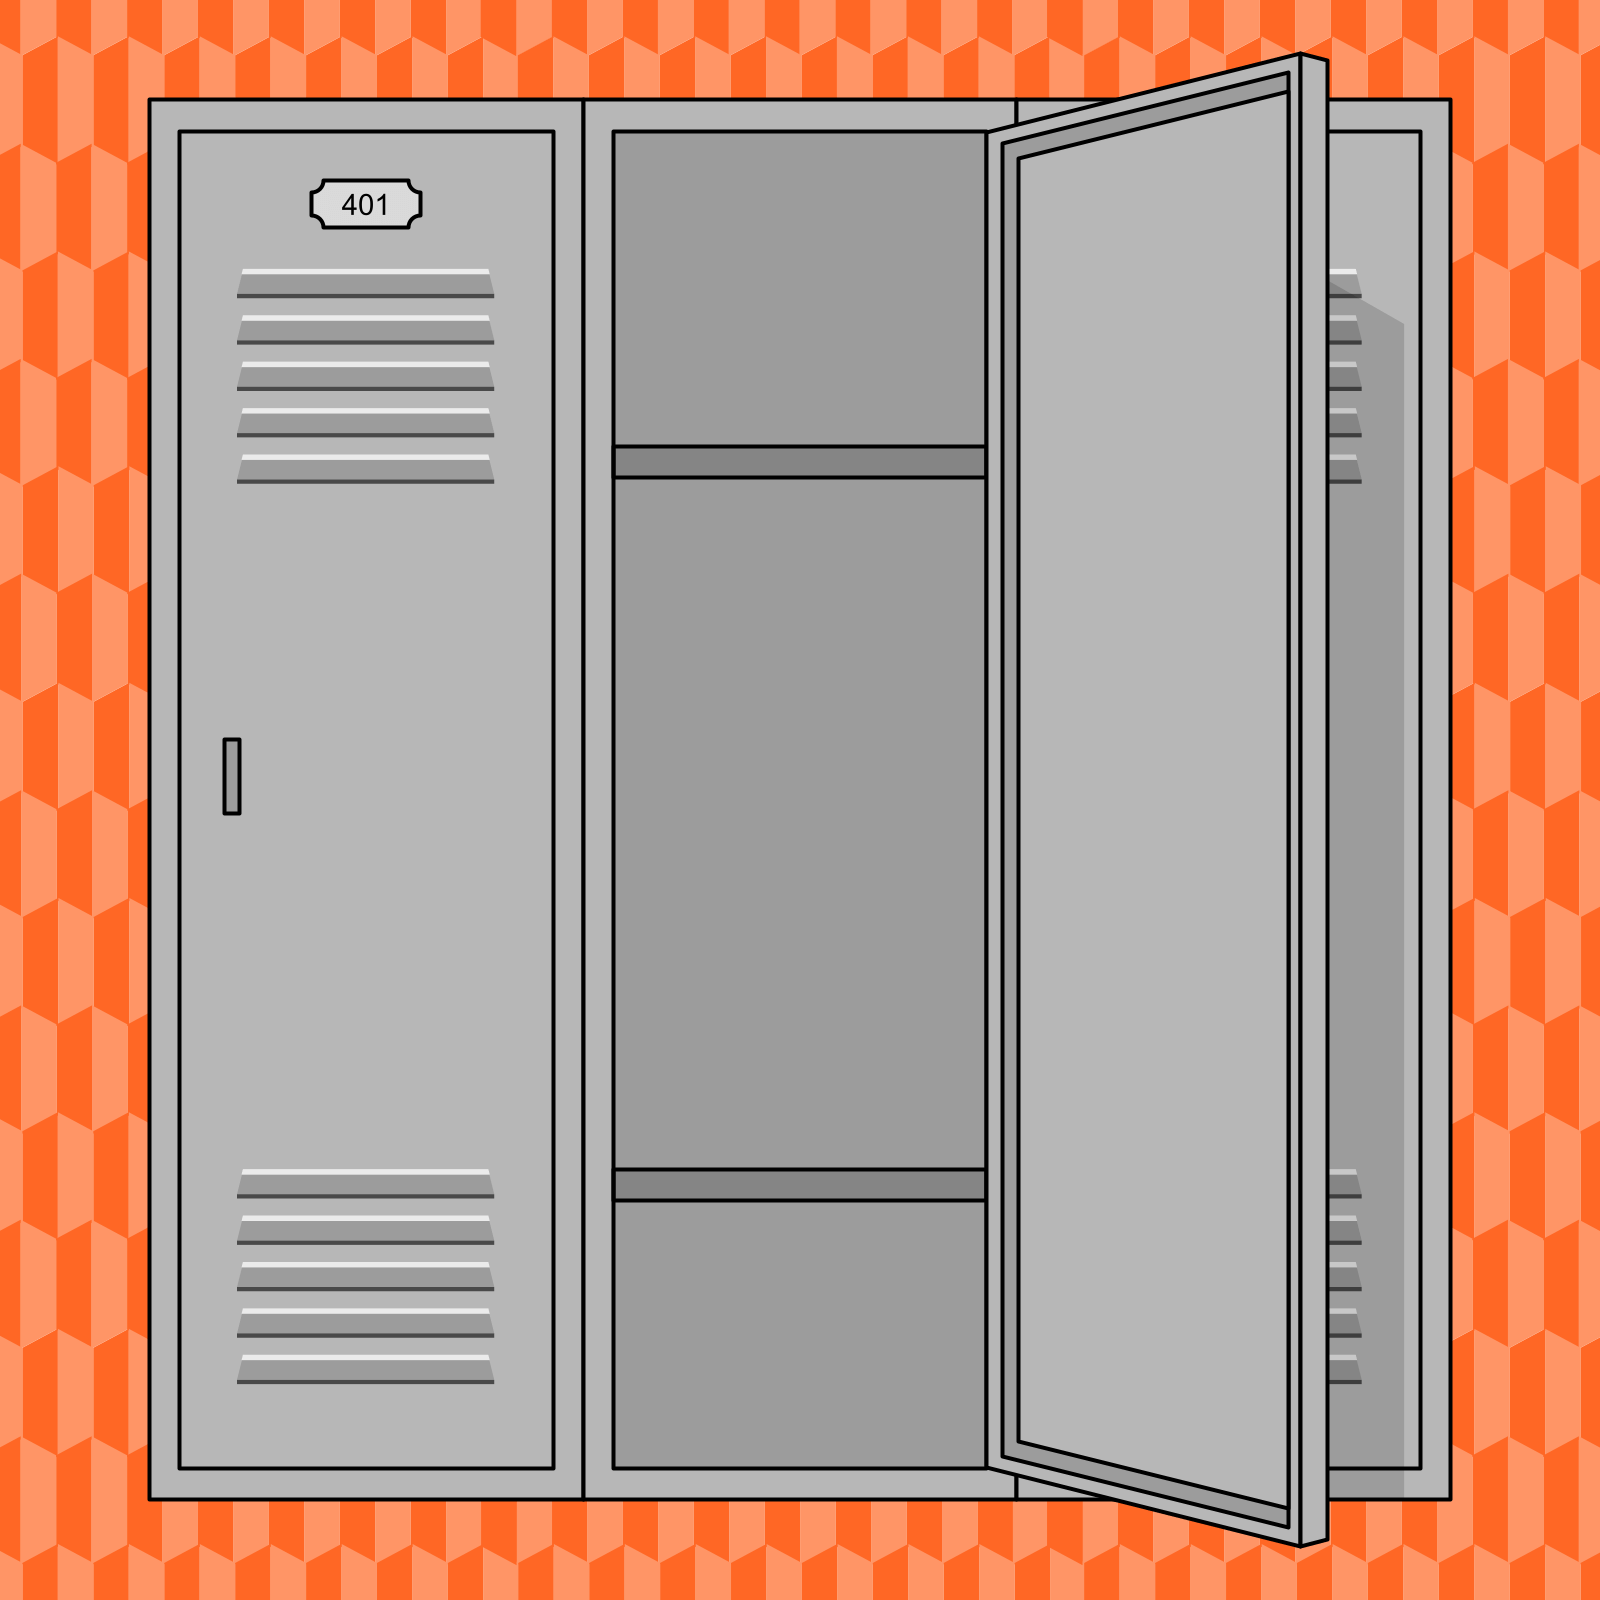 Drawing of three lockers